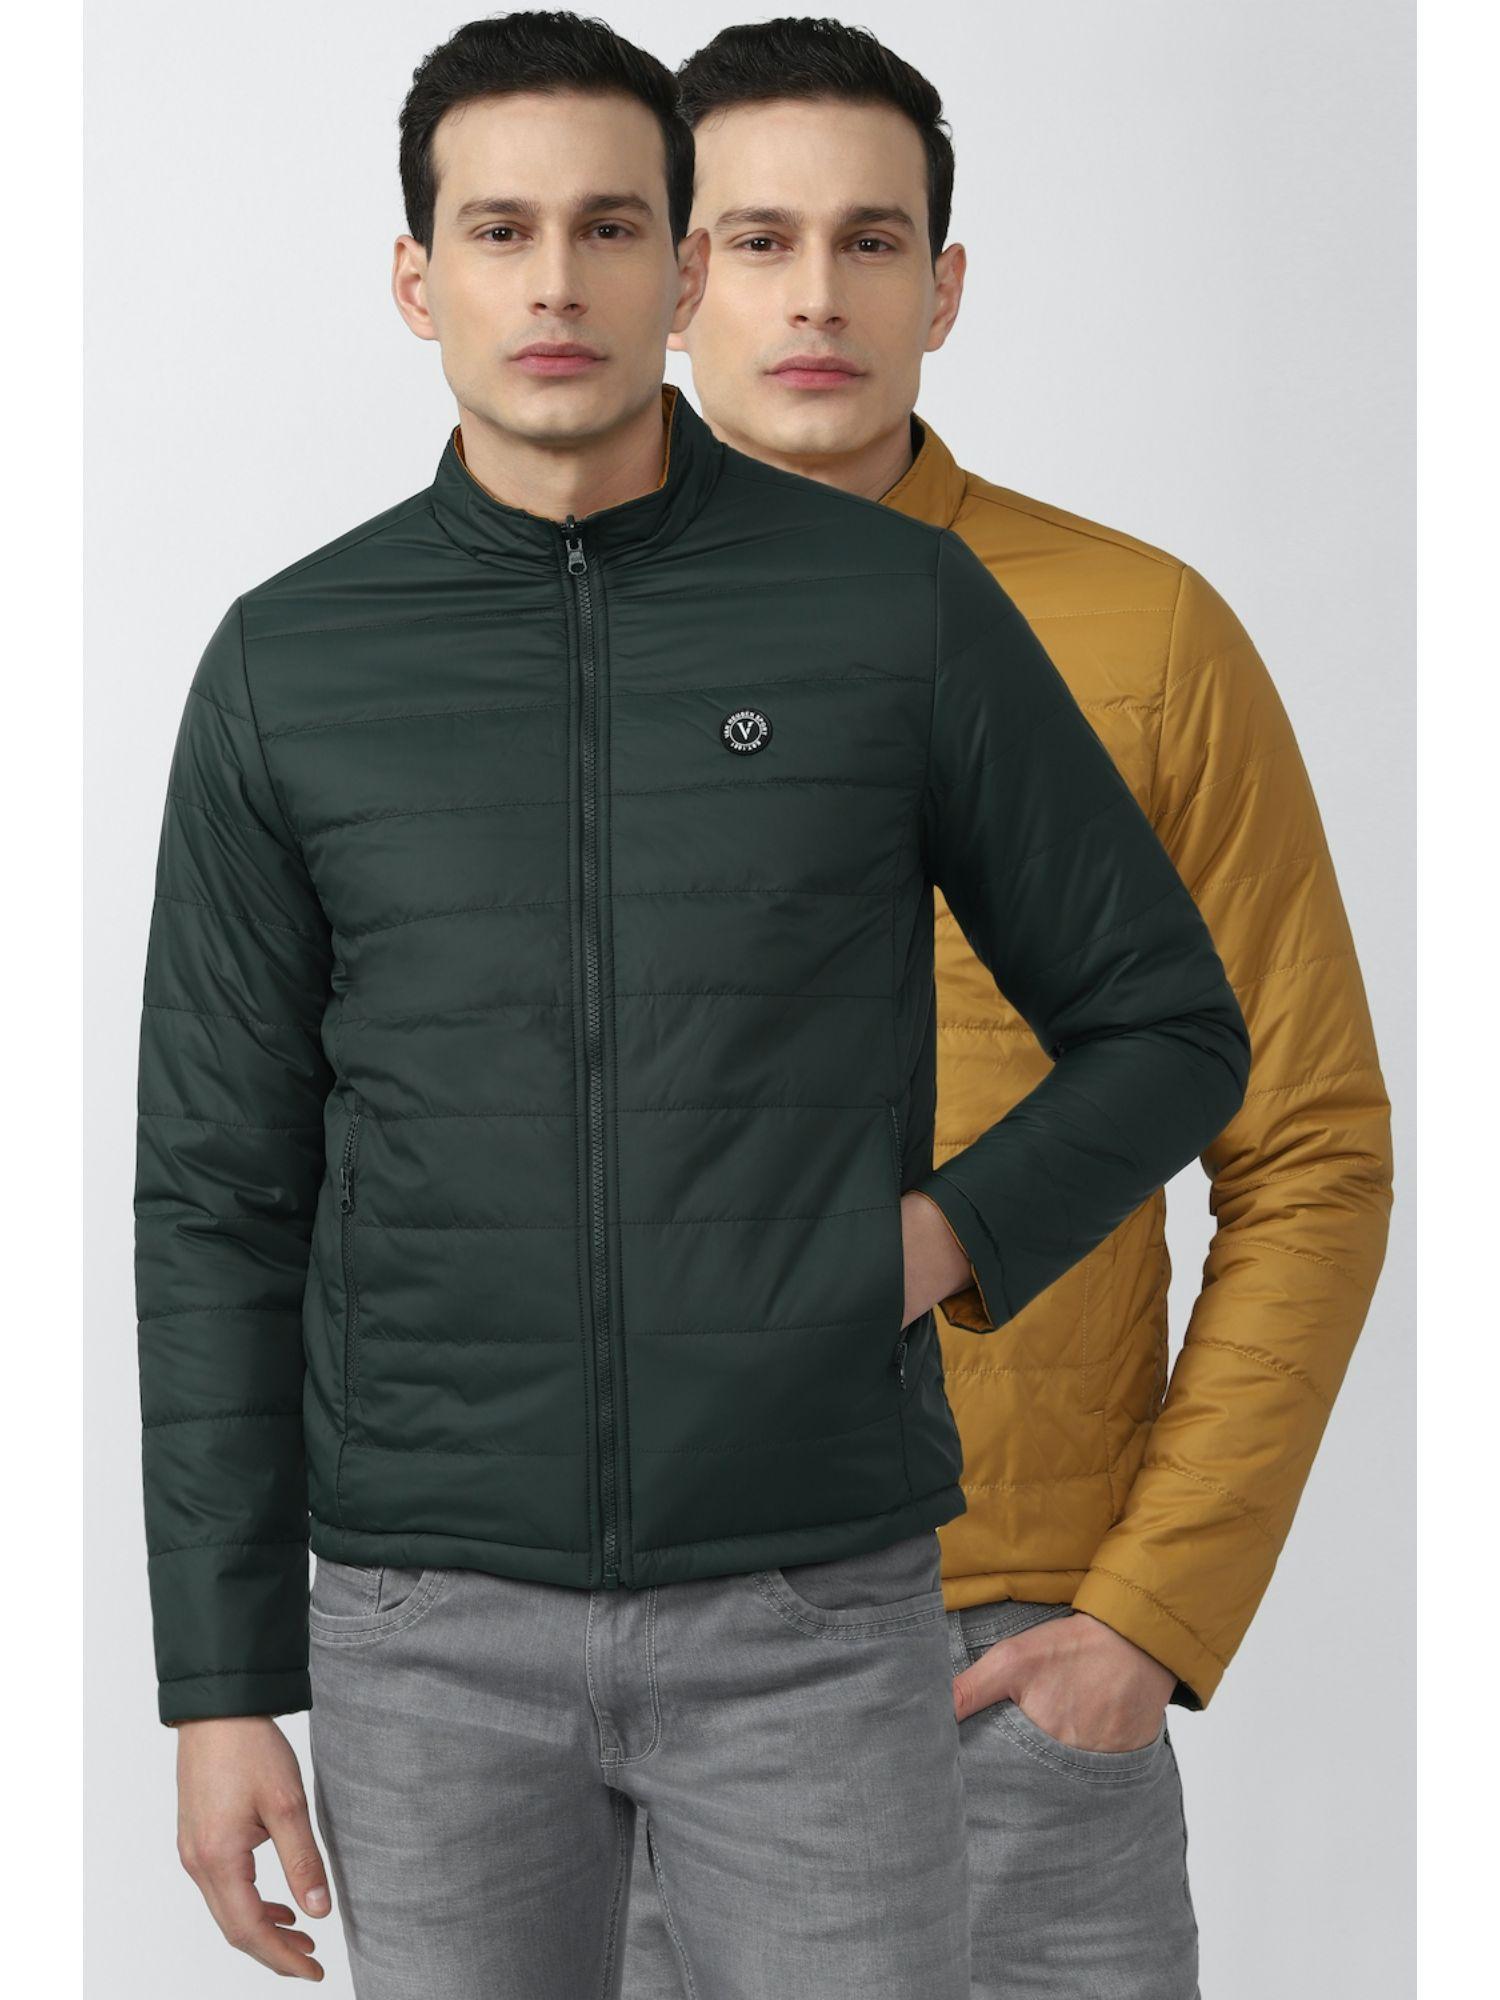 mens textured green reversible jacket